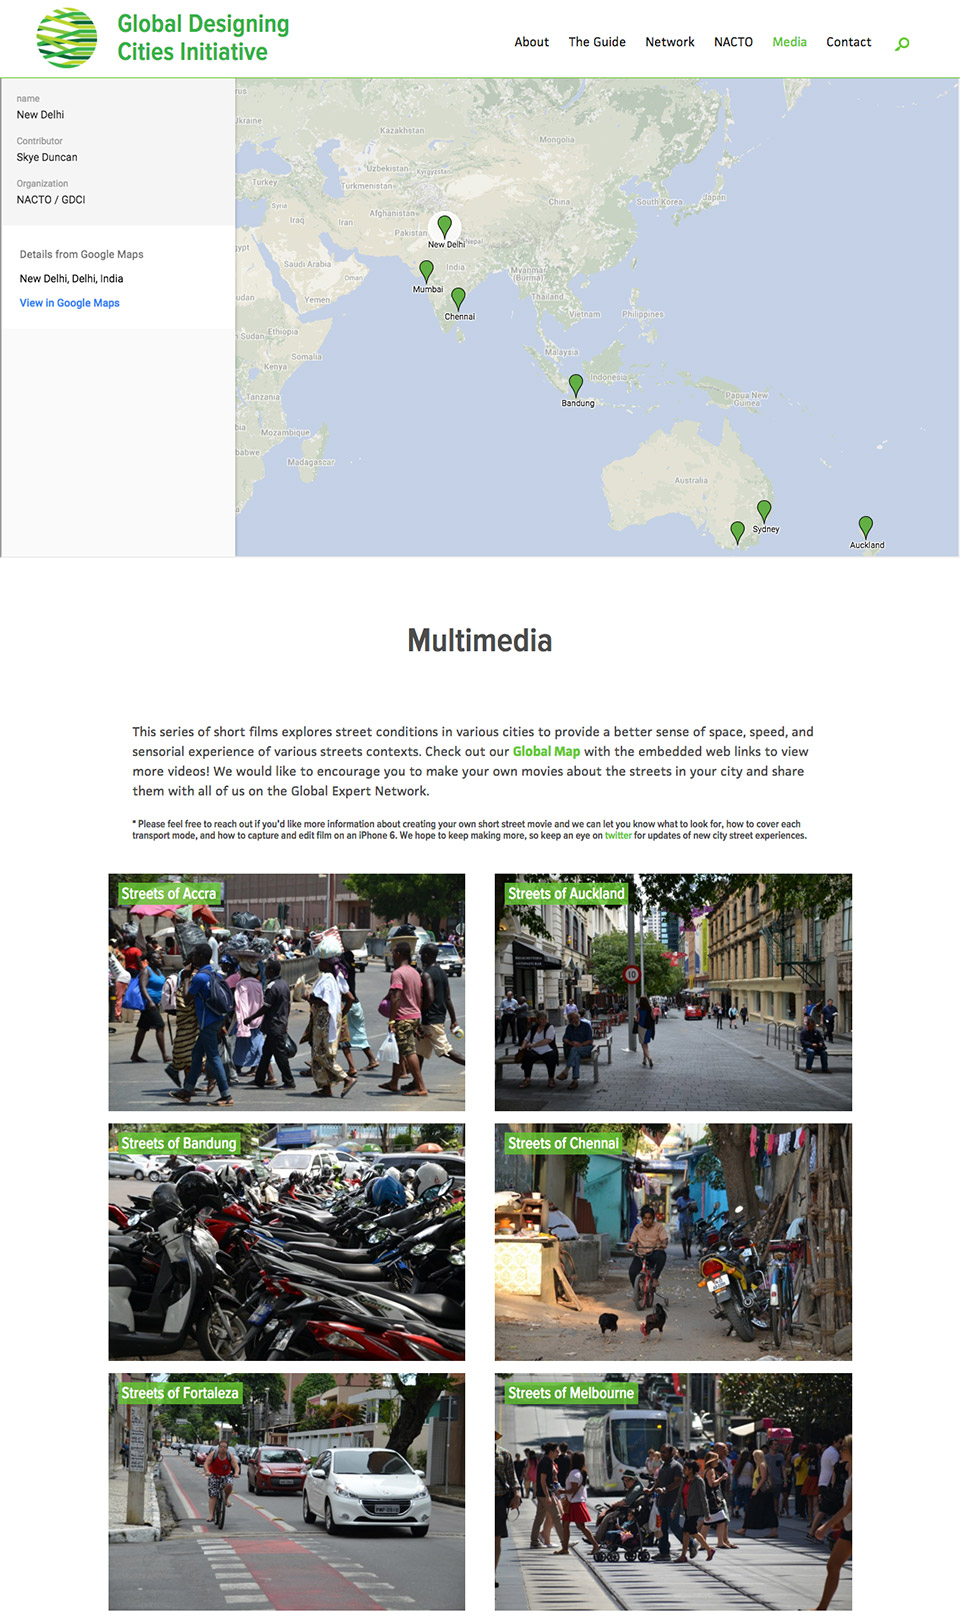 Global Designing Cities Initiative: Interactive Map & Multimedia